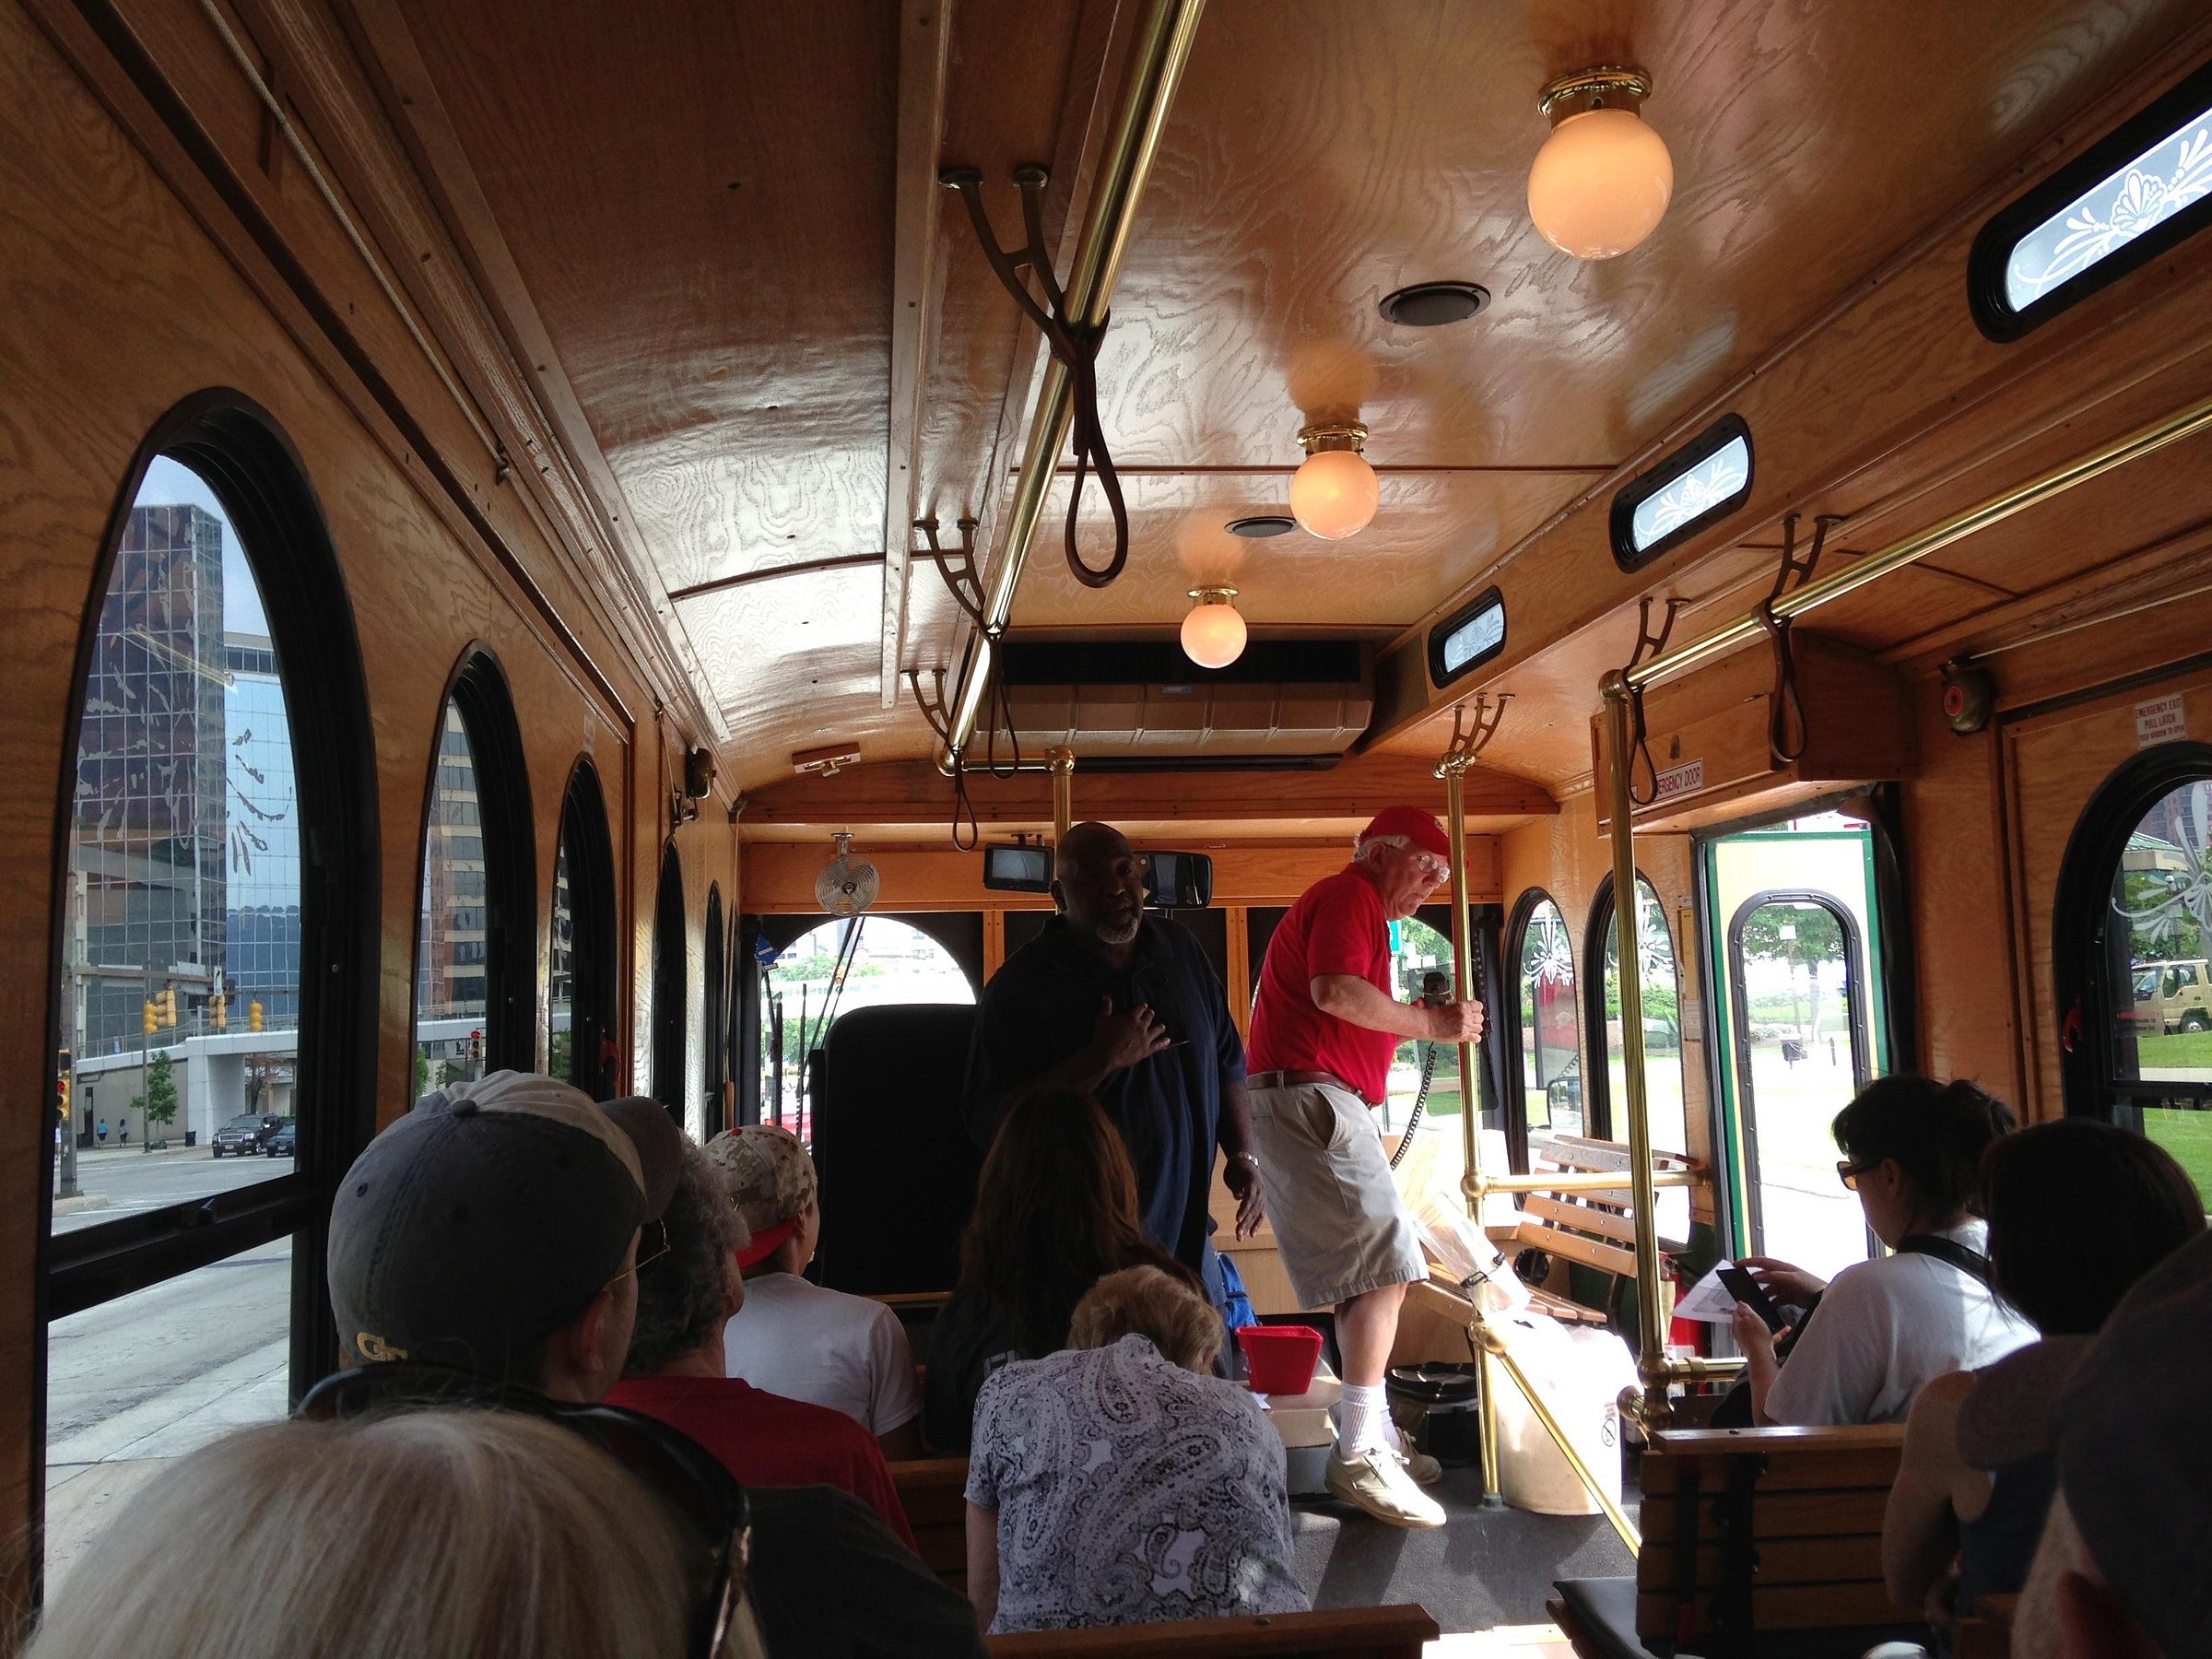 baltimore trolley tour